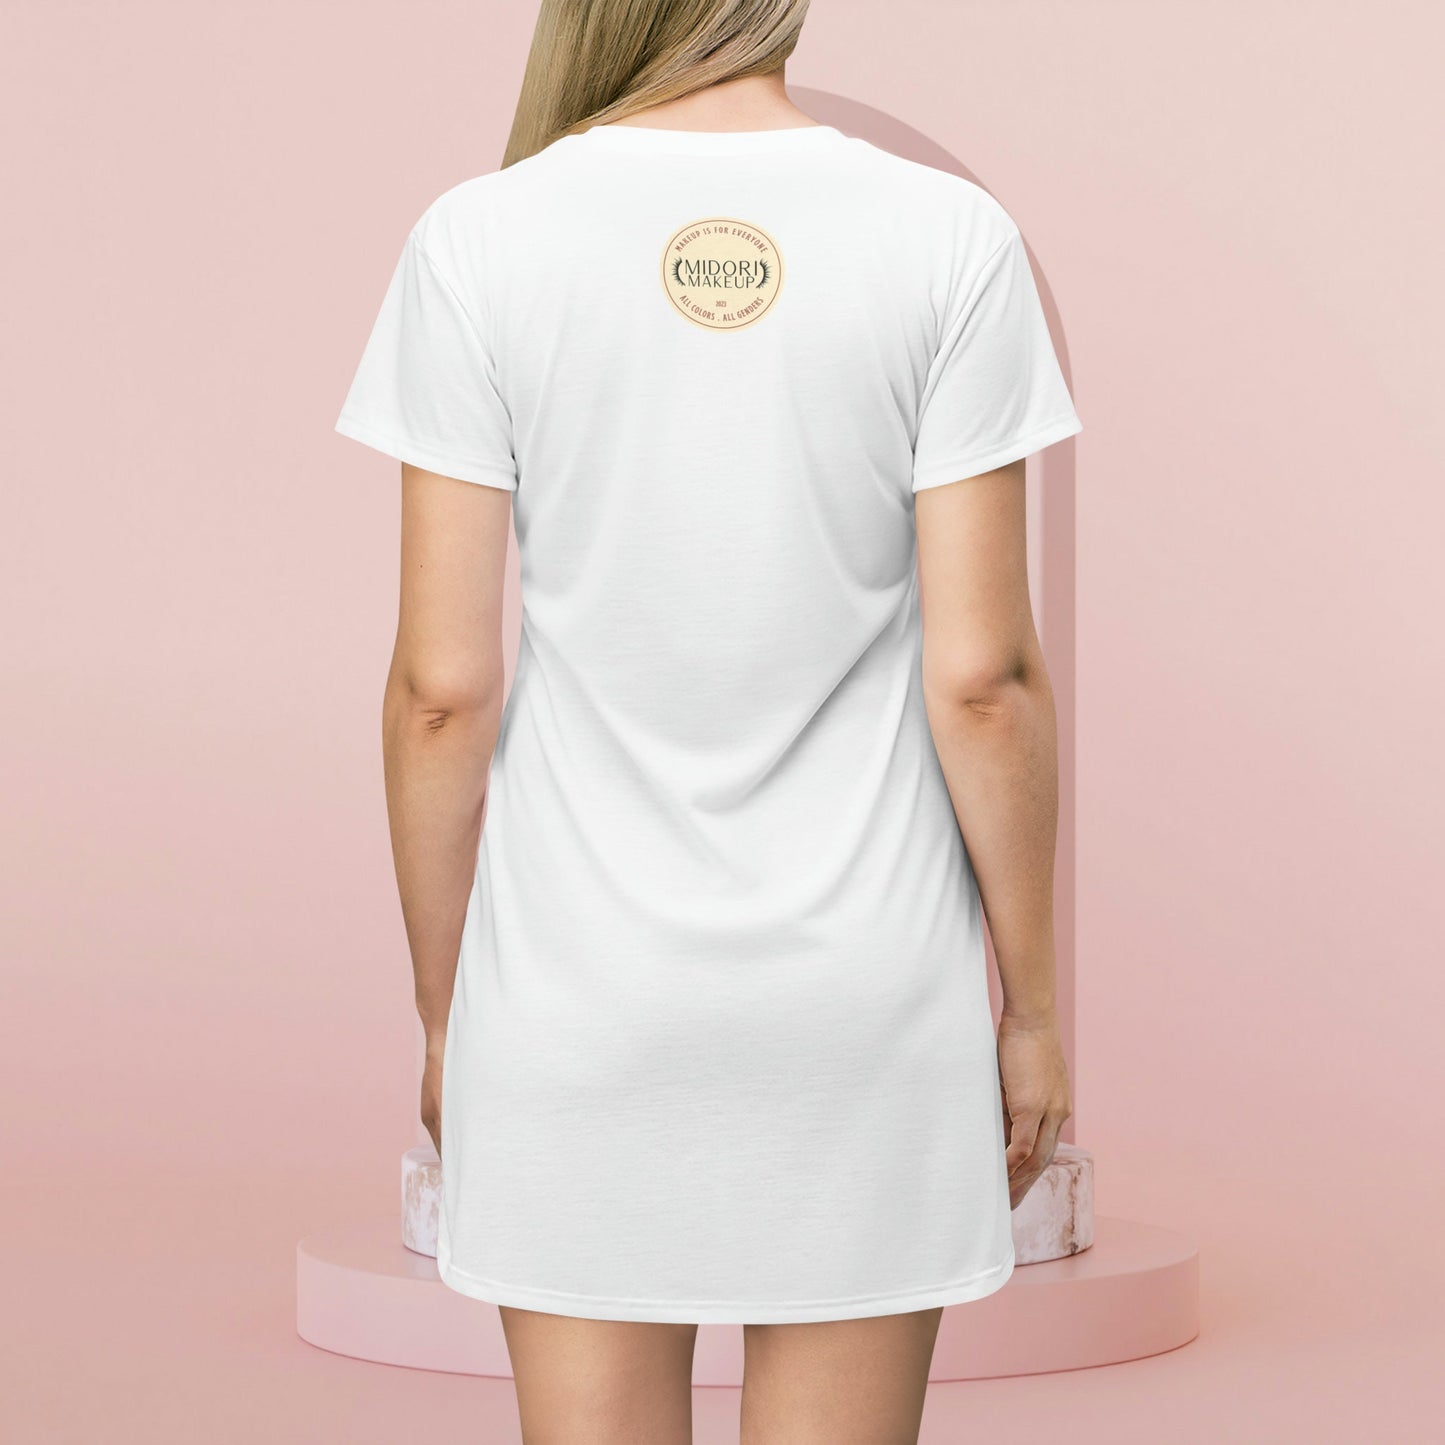 Makeup Artist TShirt Dress Gift Oversized Tshirt Womens Gift for Her Tee MUA Shirt Dress Uniform Cosmetology Tshirt Beautician Gift Blend In